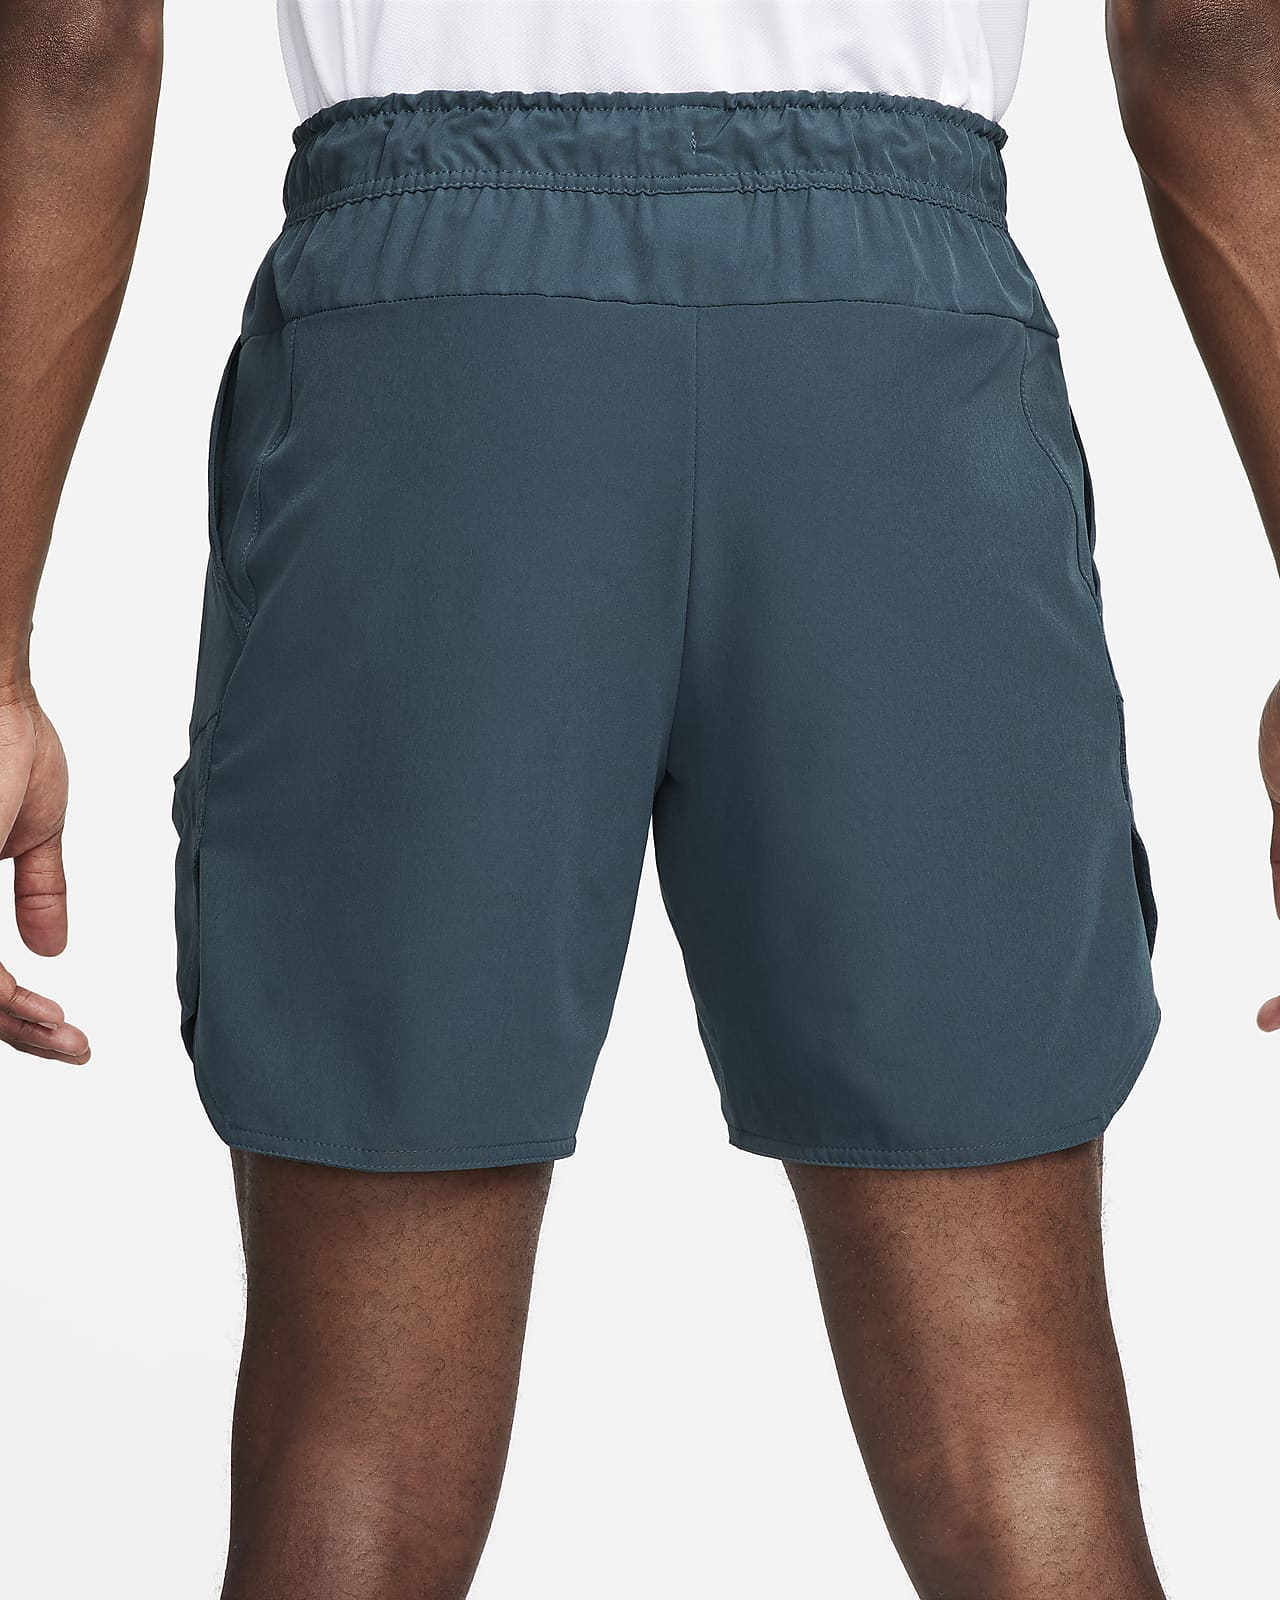  Nike Men's Tennis Court Dry Short : Clothing, Shoes